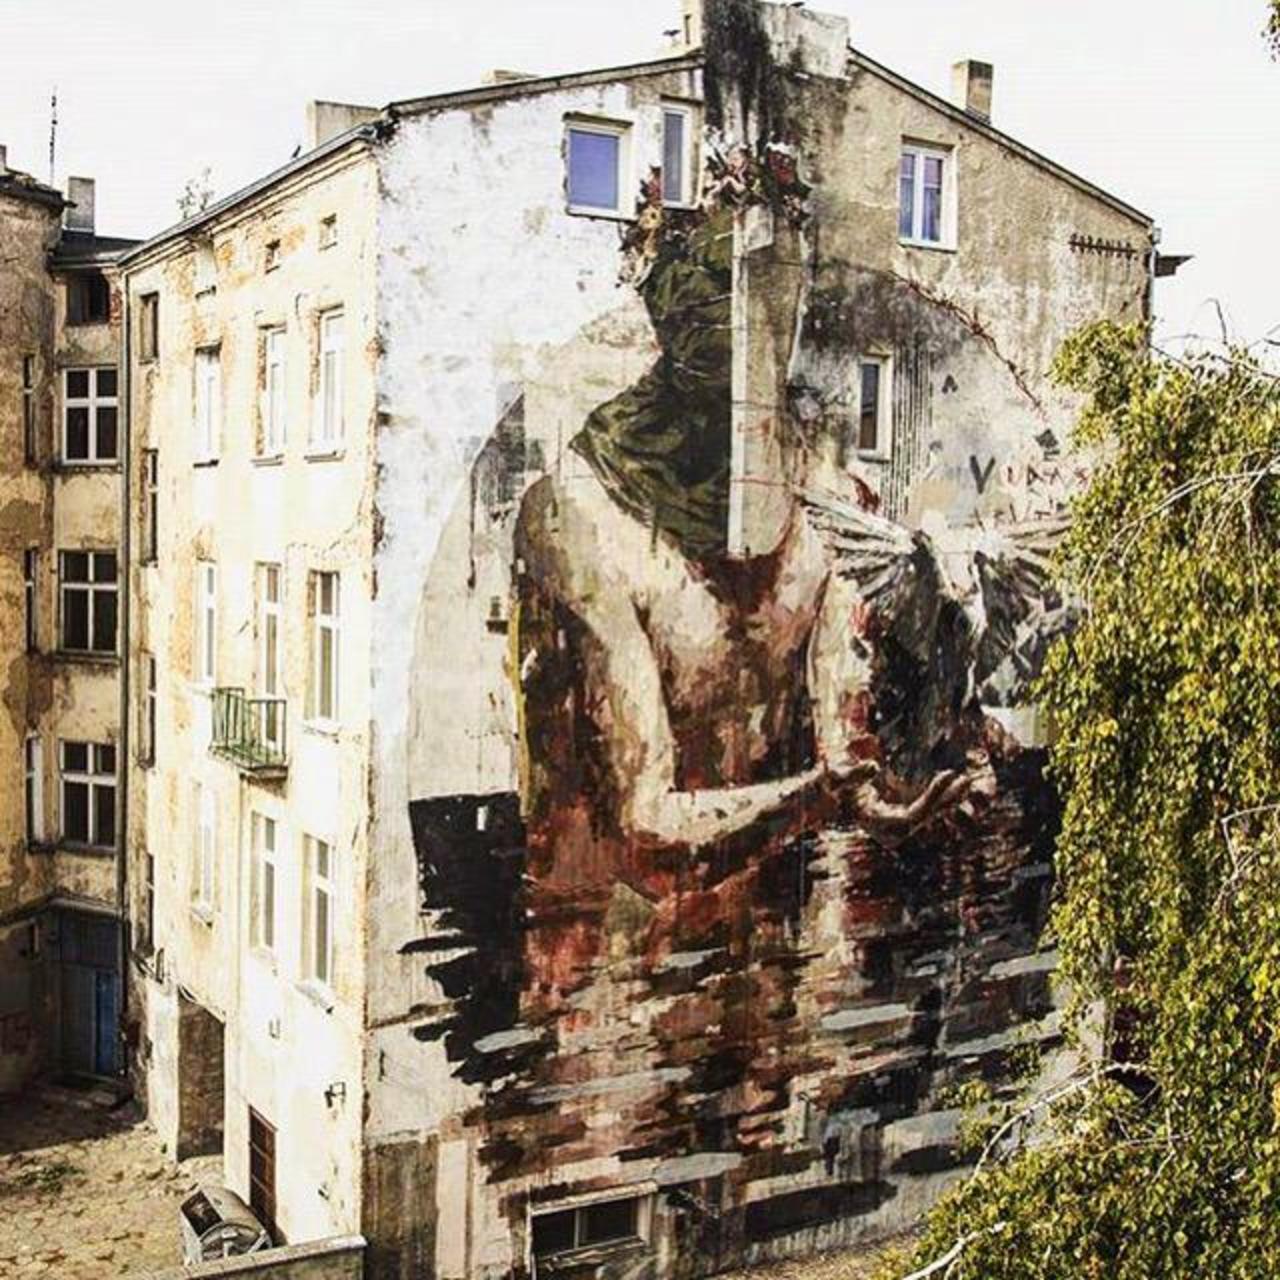 RT @allcitycanvas: The great #Borondo for @lodzmurals in Lodz, #Poland #streetart #graffiti #art http://t.co/KP5BG9QcId